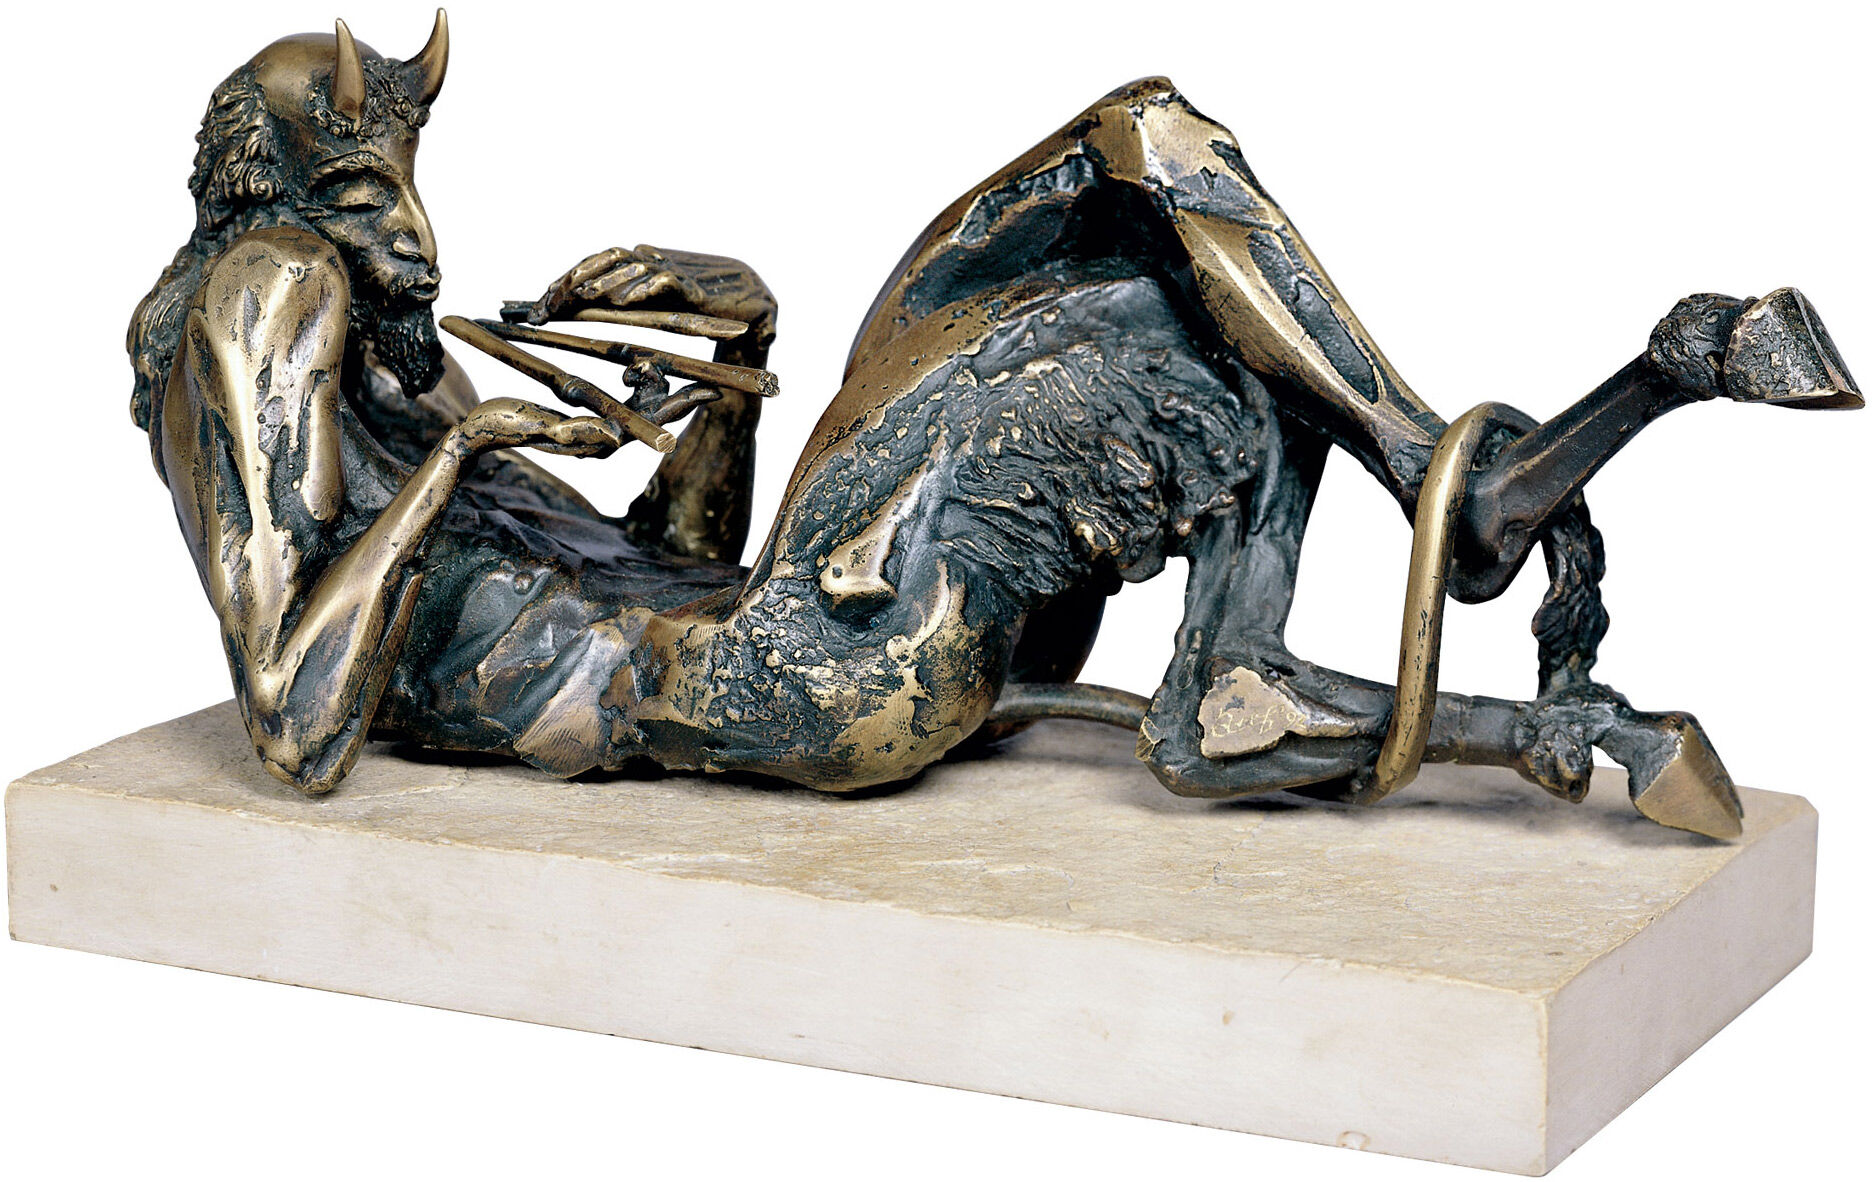 Skulptur "Pan", bronze på natursten von Nikolay Anev